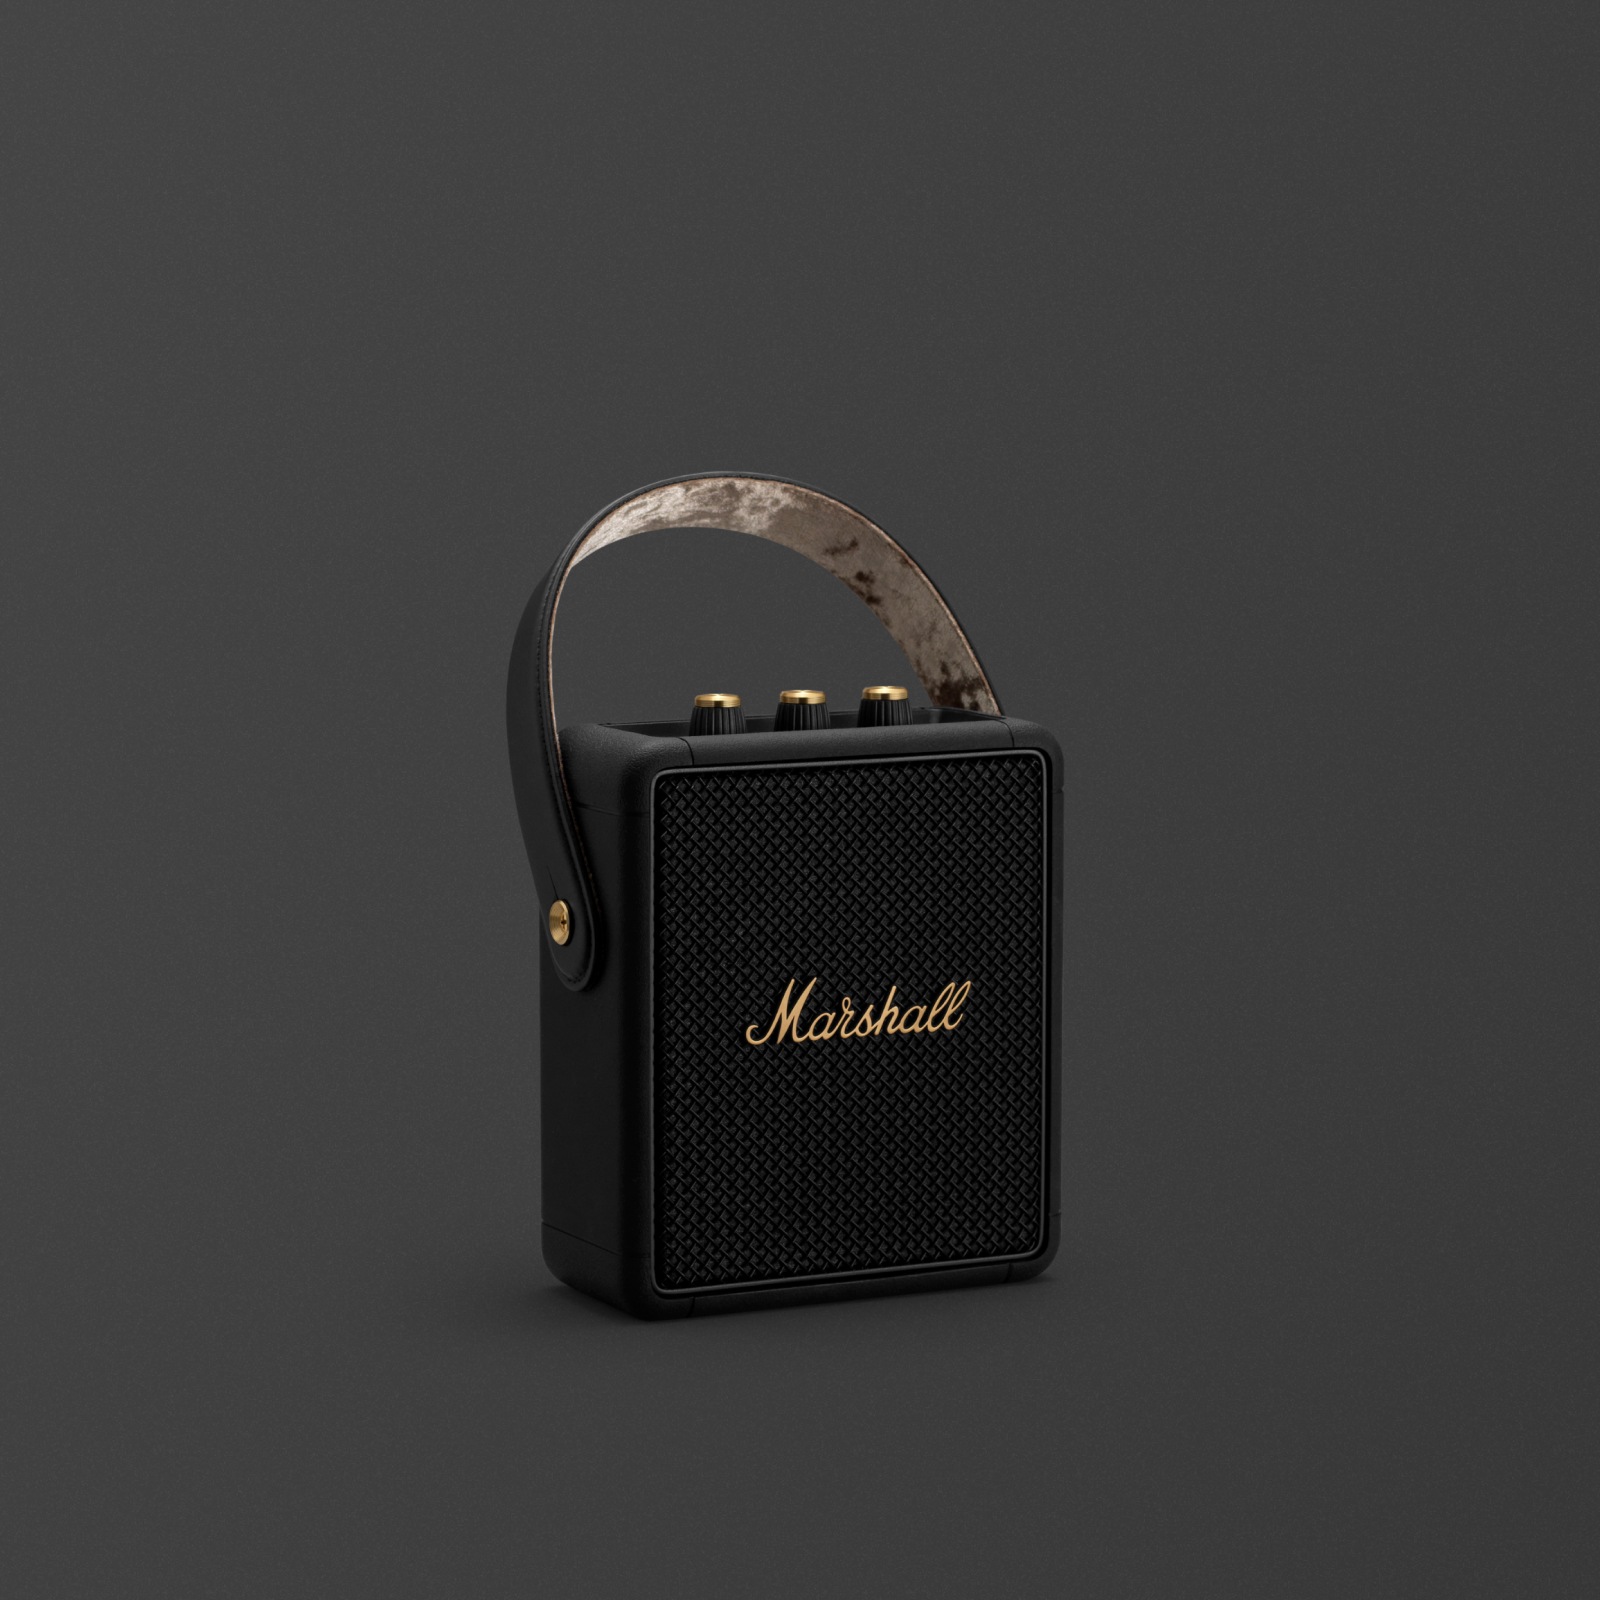 Marshall STOCKWELL II BLACK AND BRASSは音楽好きが外出するときにぴったりな、小型で軽量なポータブルBluetoothスピーカーです。